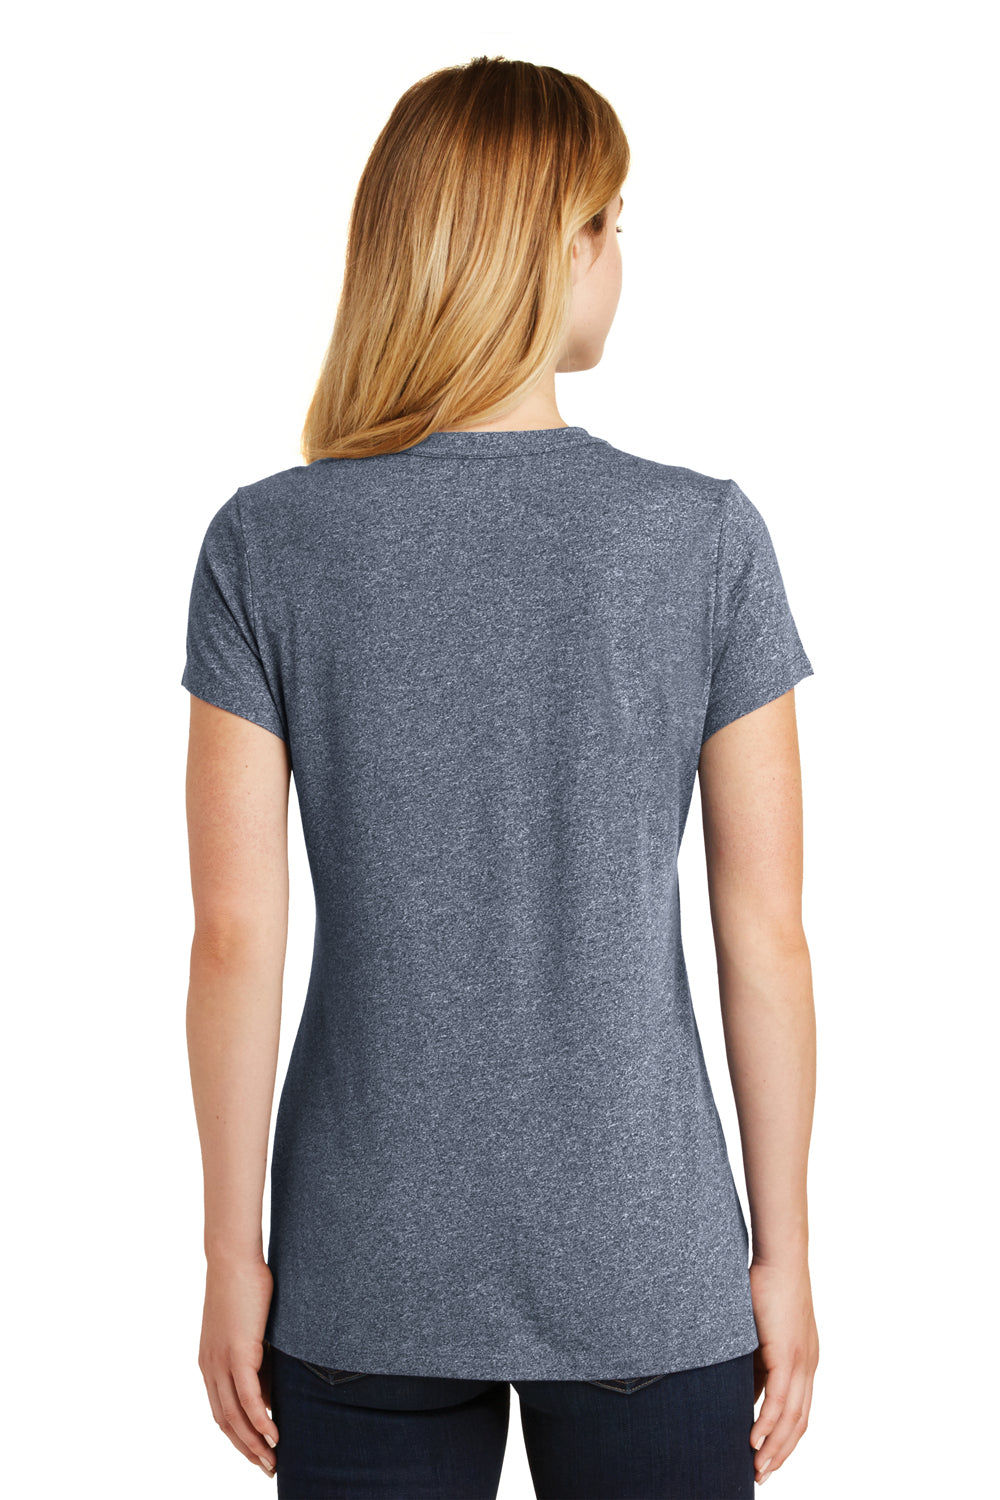 New Era LNEA100 Womens Heritage Short Sleeve Crewneck T-Shirt Navy Blue Twist Back